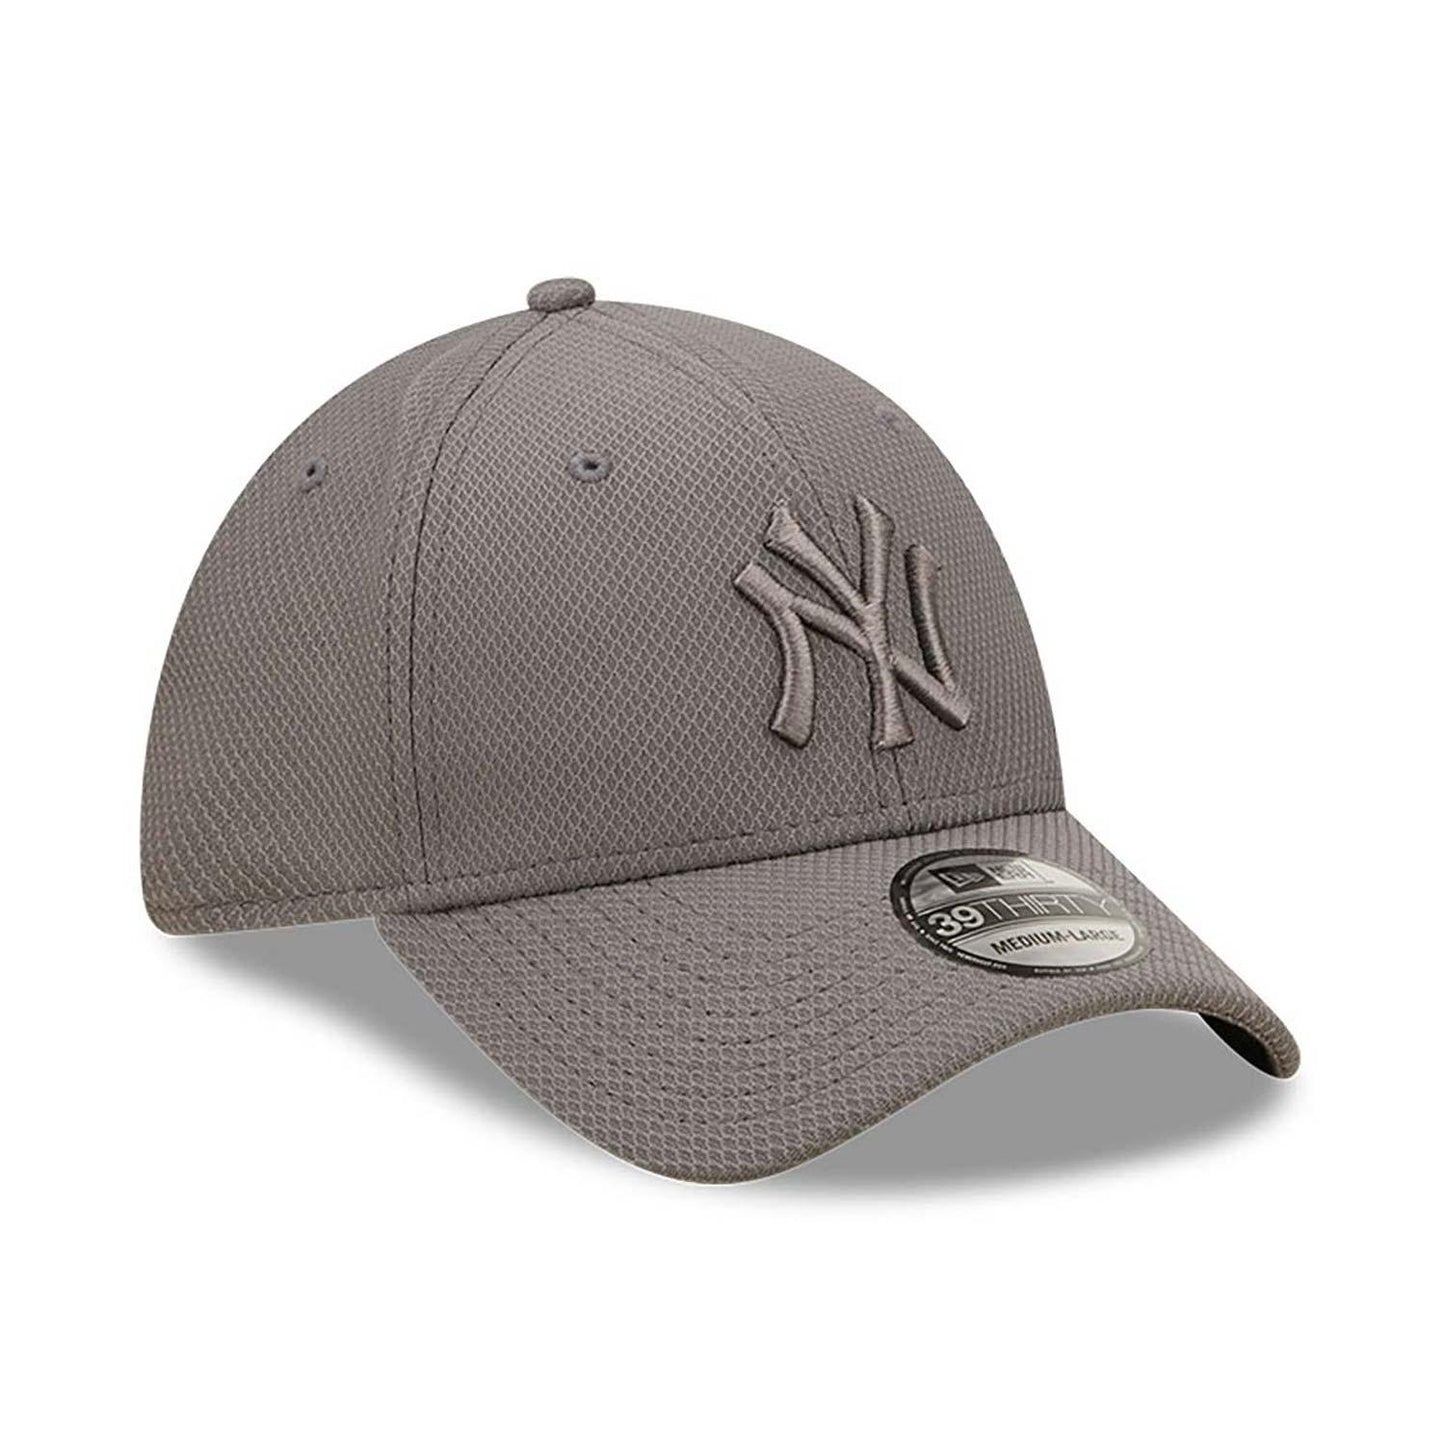 NEW ERA 39THIRTY MLB NEW YORK YANKEES DIAMOND ERA STRETCH FIT GREY CAP